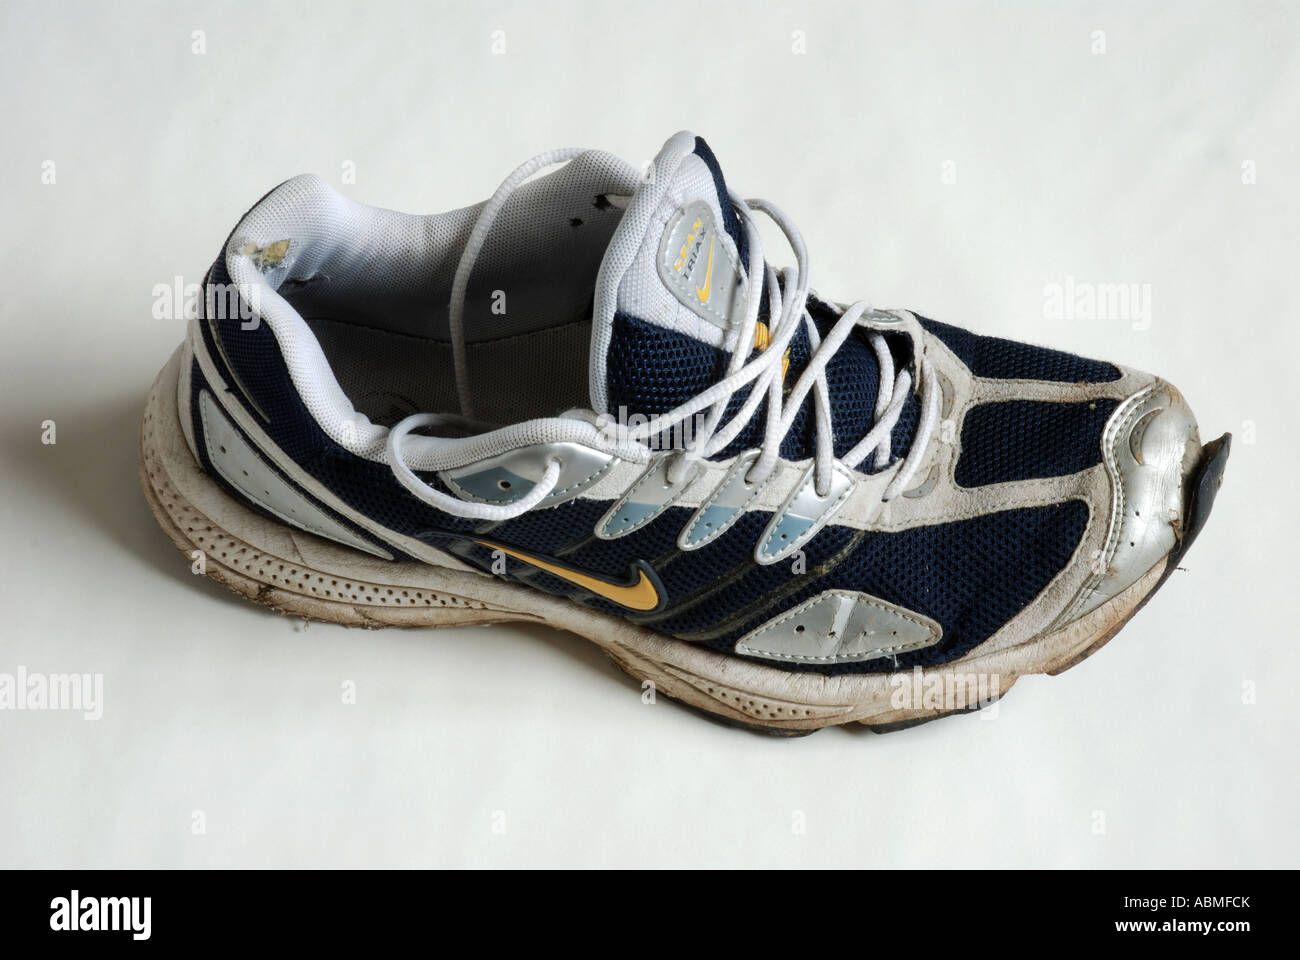 Une vieille chaussure de course Nike Photo Stock - Alamy